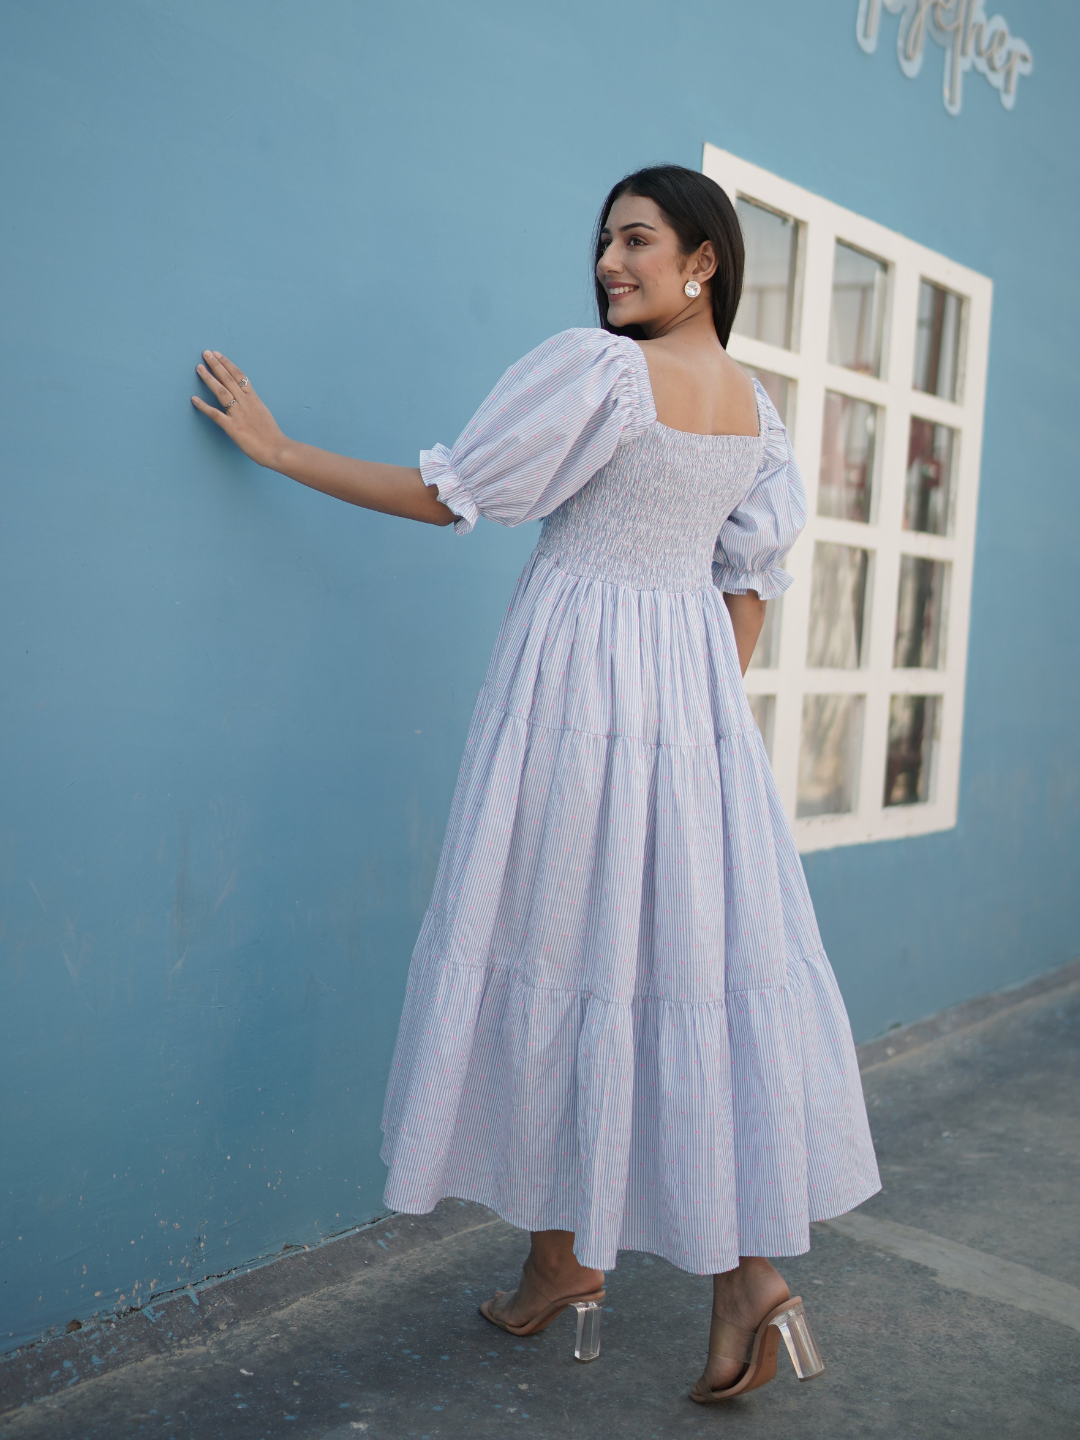 Cotton White Fancy Girls Dress Sets at Rs 190/set in Jaipur